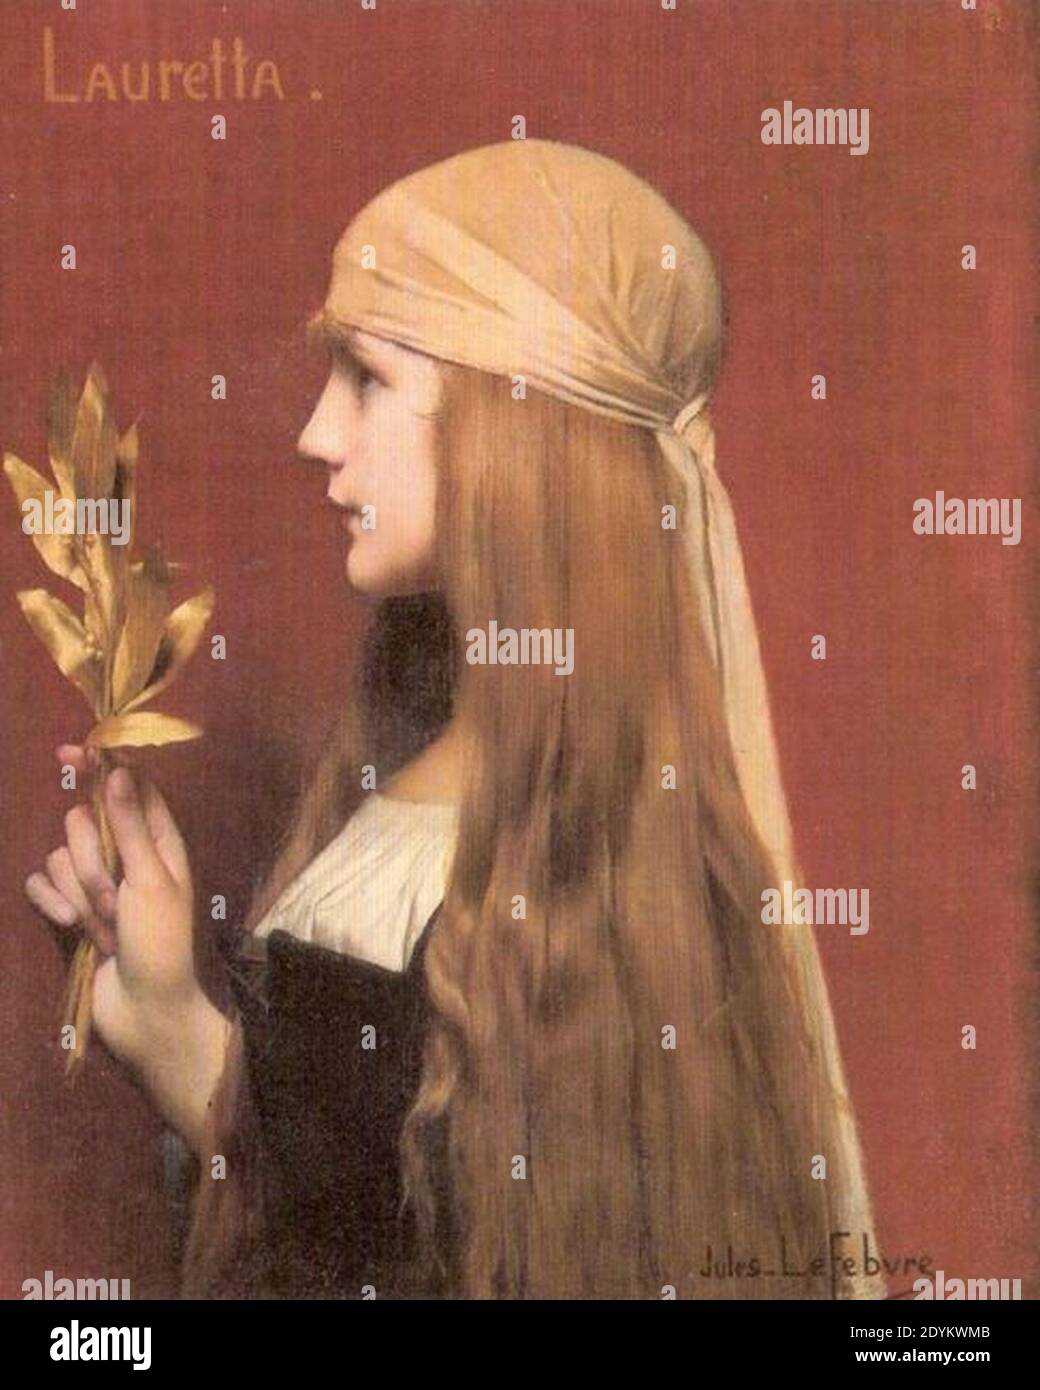 File:Fatima (1883), by Jules Joseph Lefebvre.jpg - Wikimedia Commons